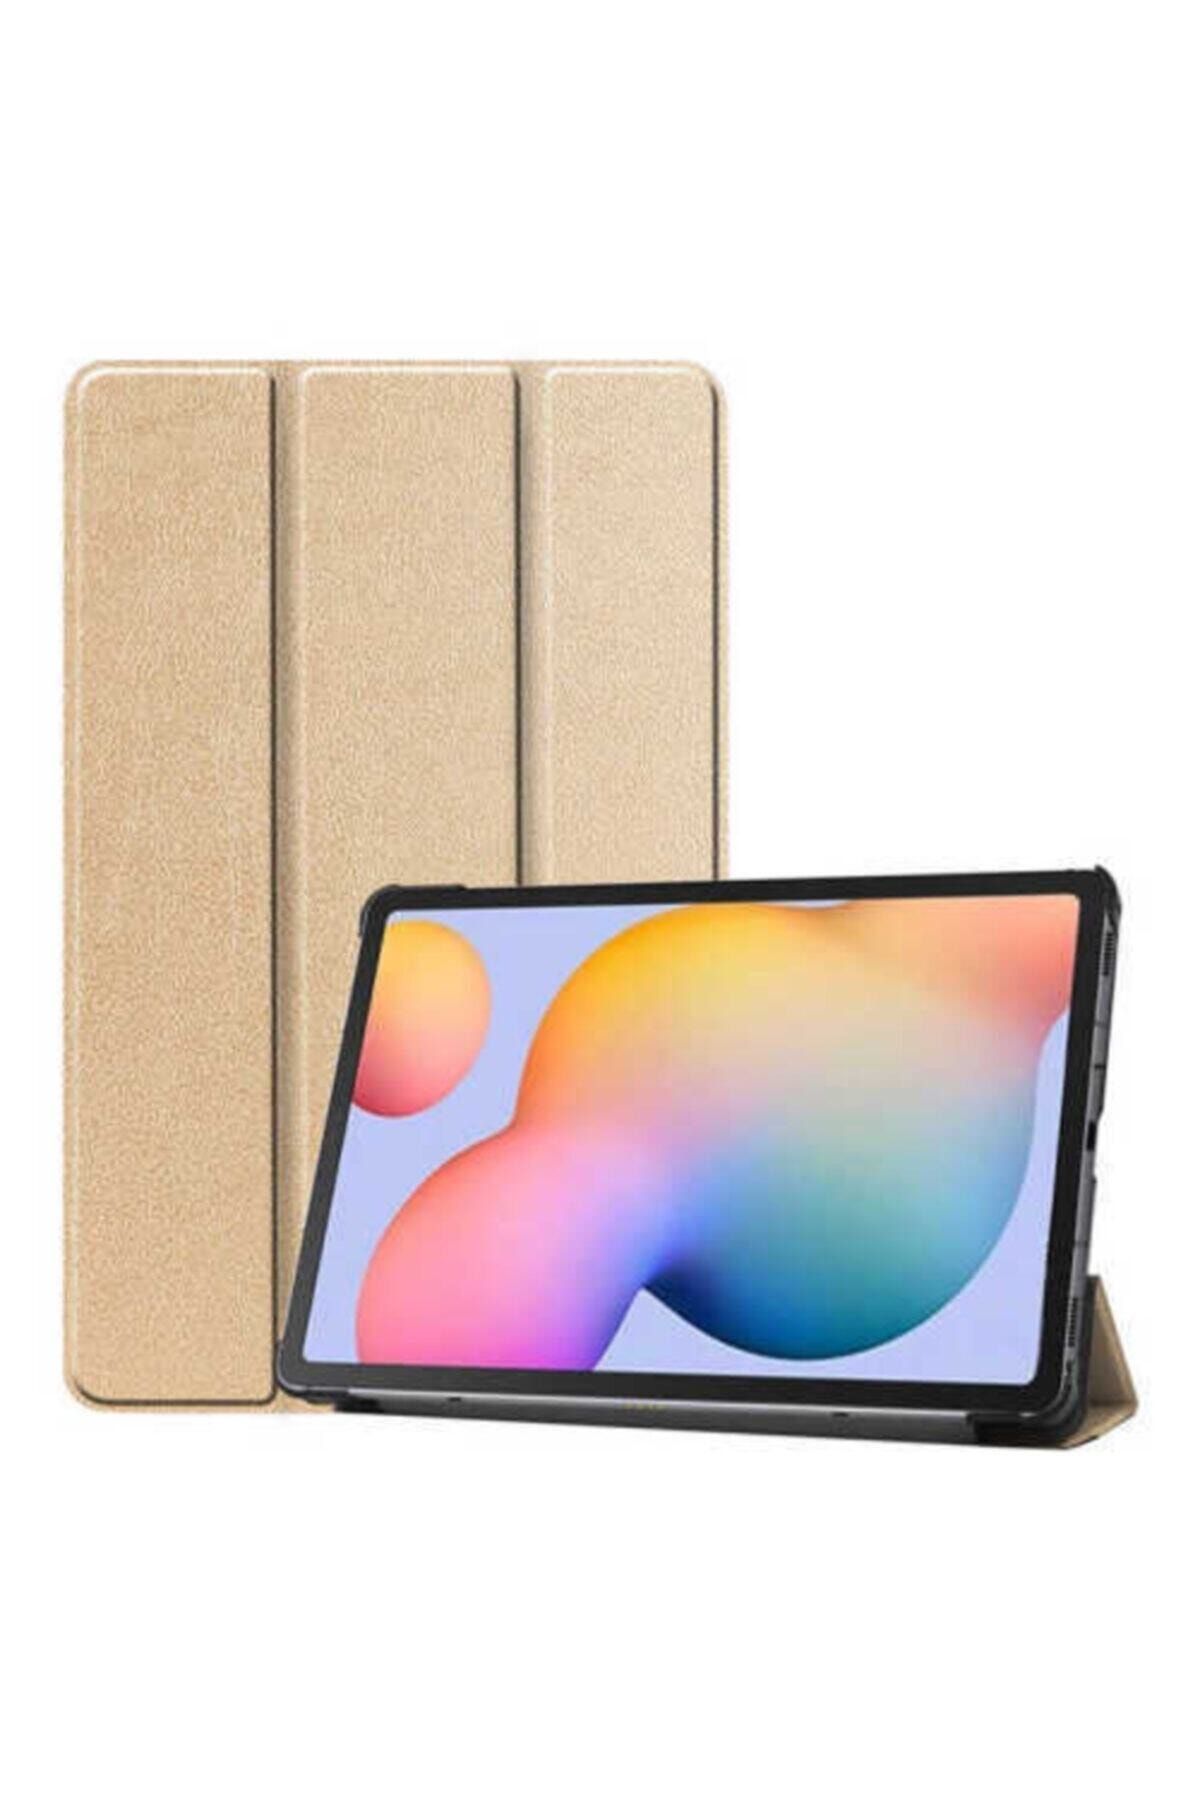 TEKNETSTORE Galaxy Tab A7 10.4 2020 T500 T505 Tablet Flip Smart Cover Standlı Kılıf